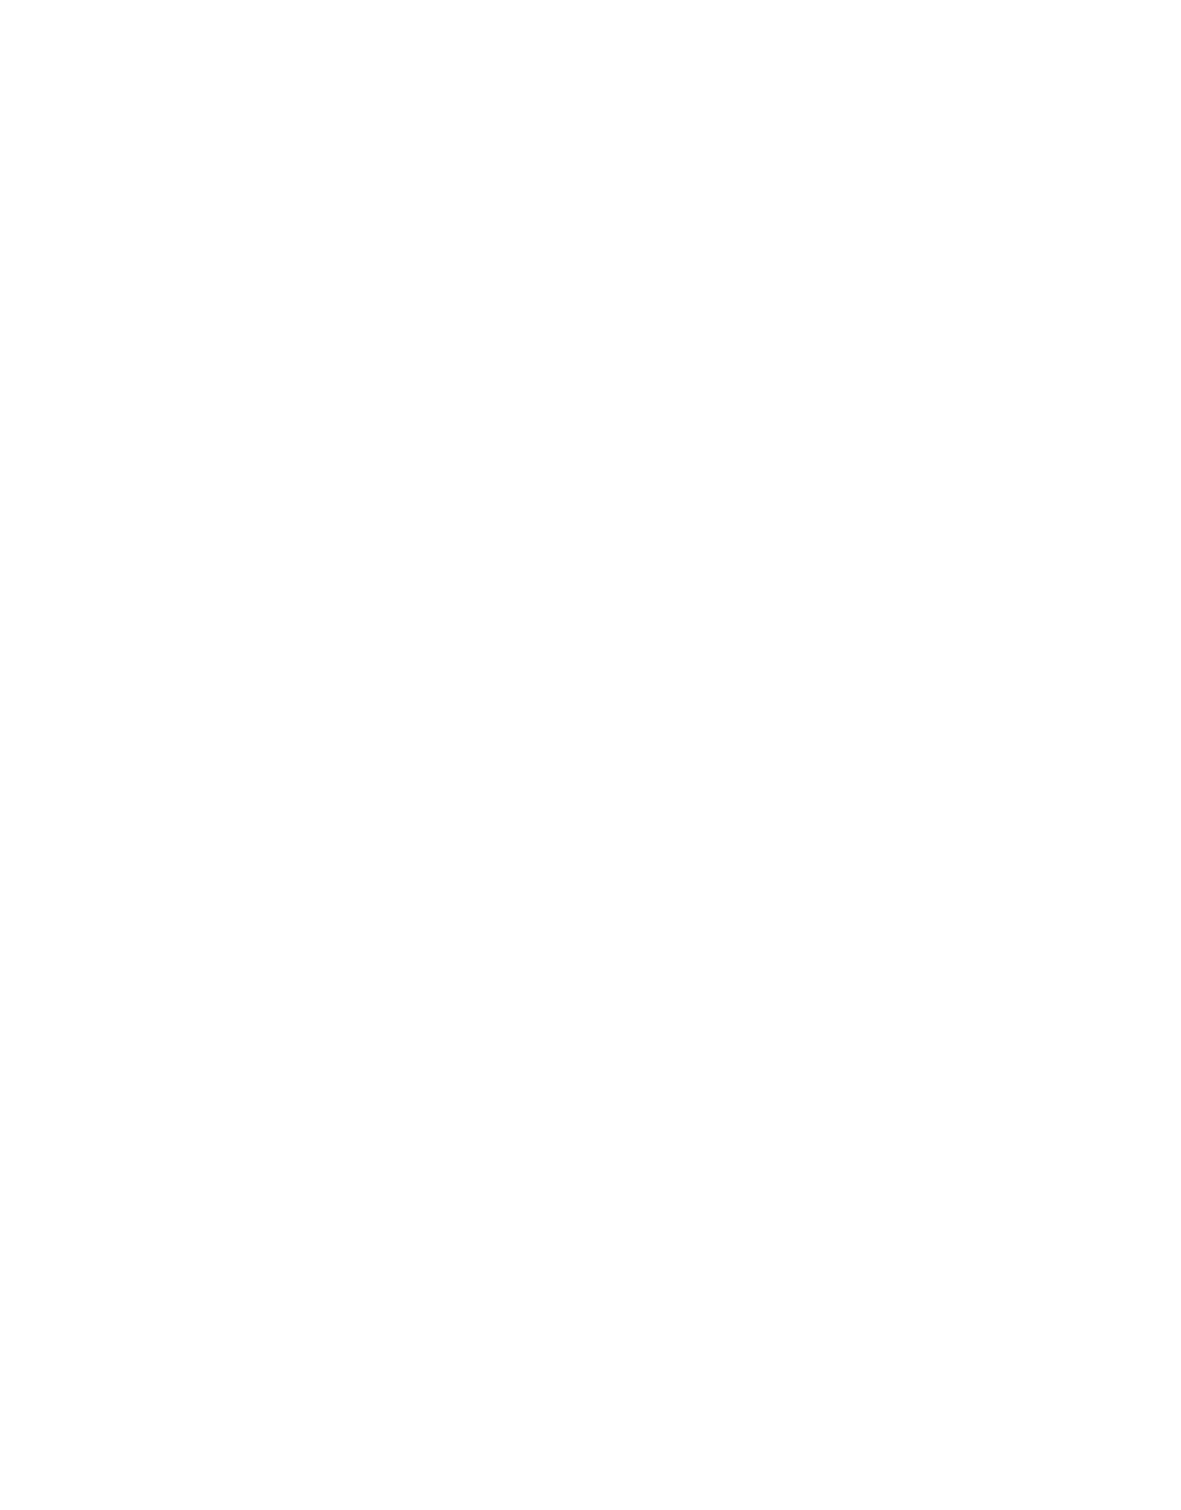 Obayashi logo grand pour les fonds sombres (PNG transparent)